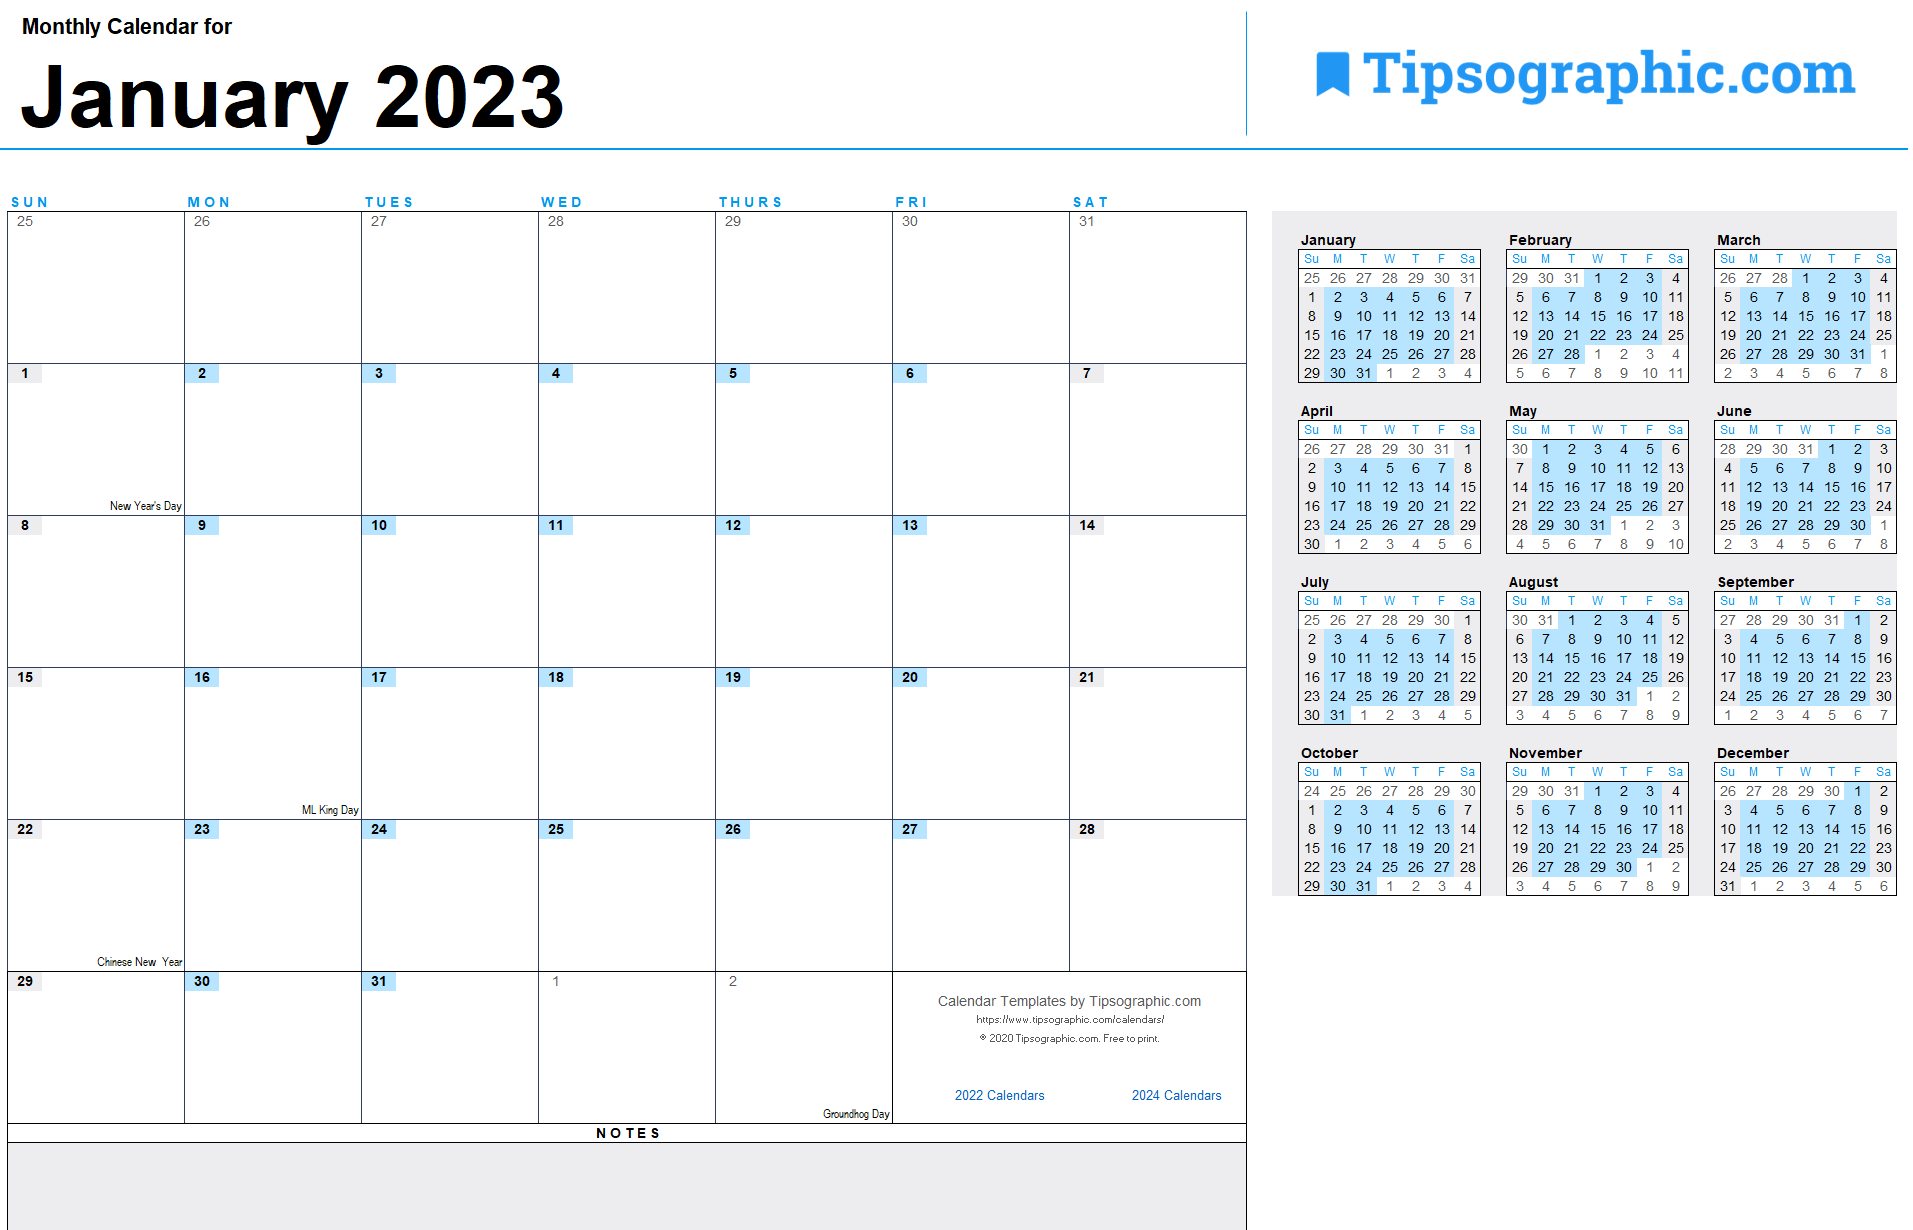 Monthly Calendar Template 2023 2023